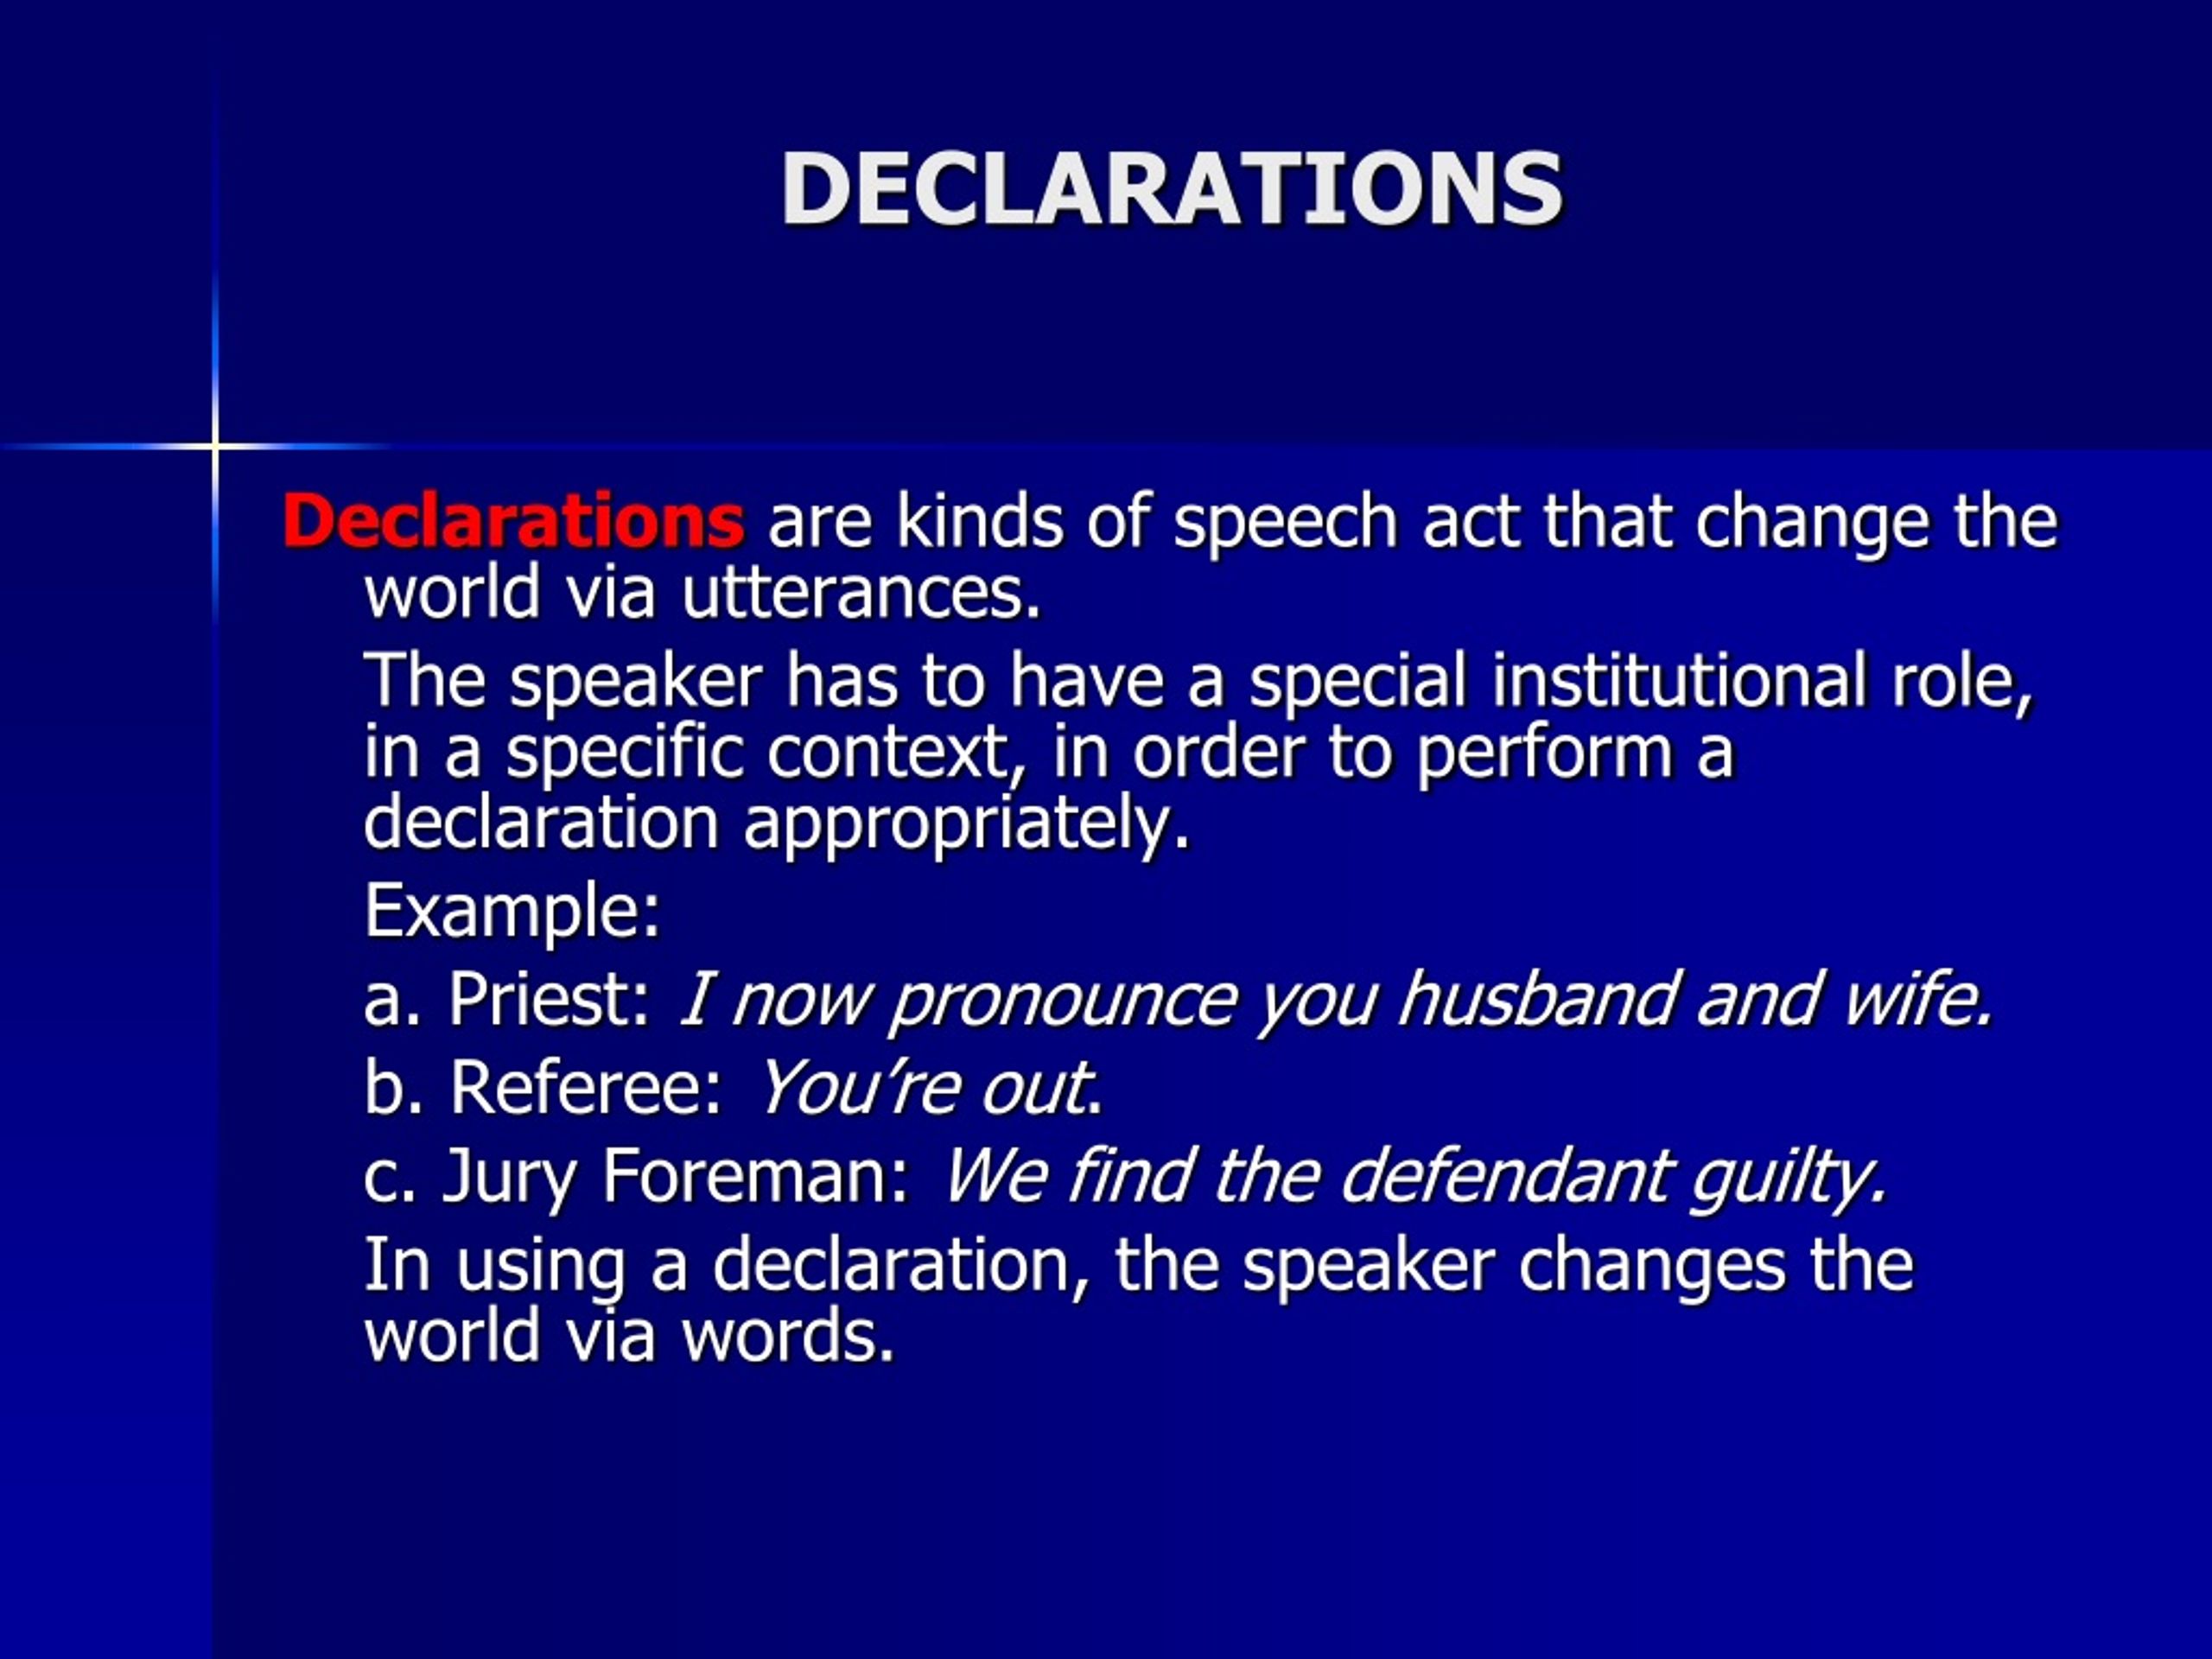 declaration speech act meaning